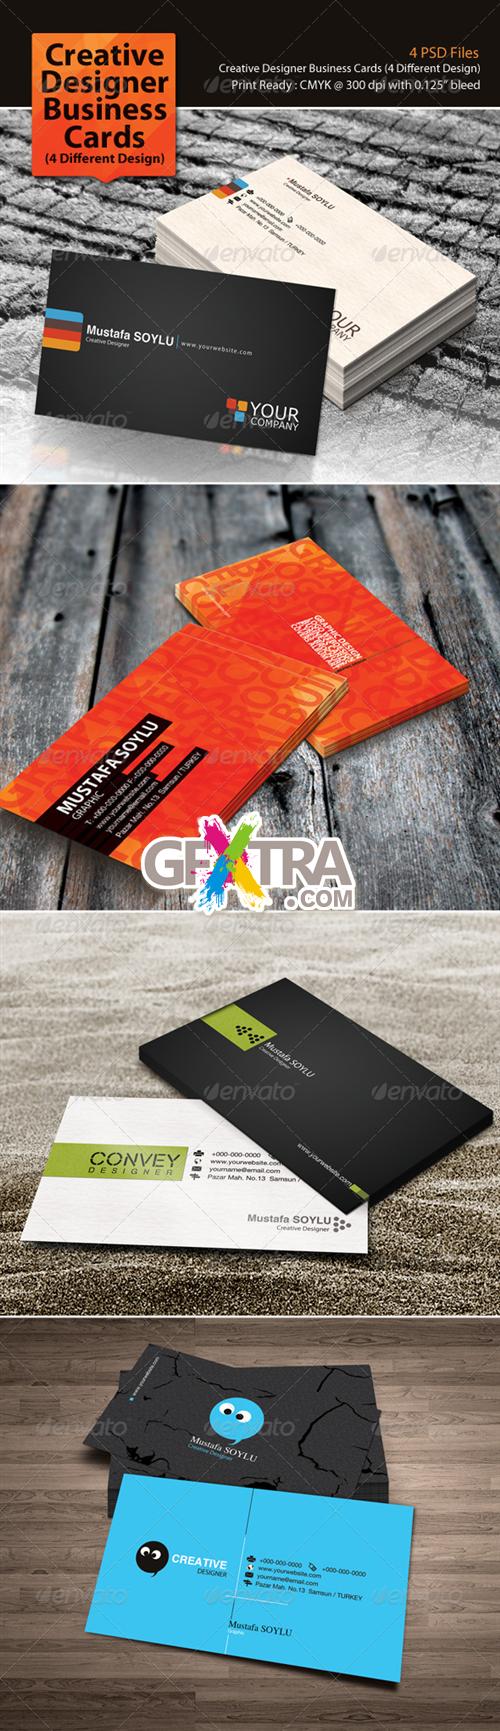 GraphicRiver - Creative Designer Business Cards Pack